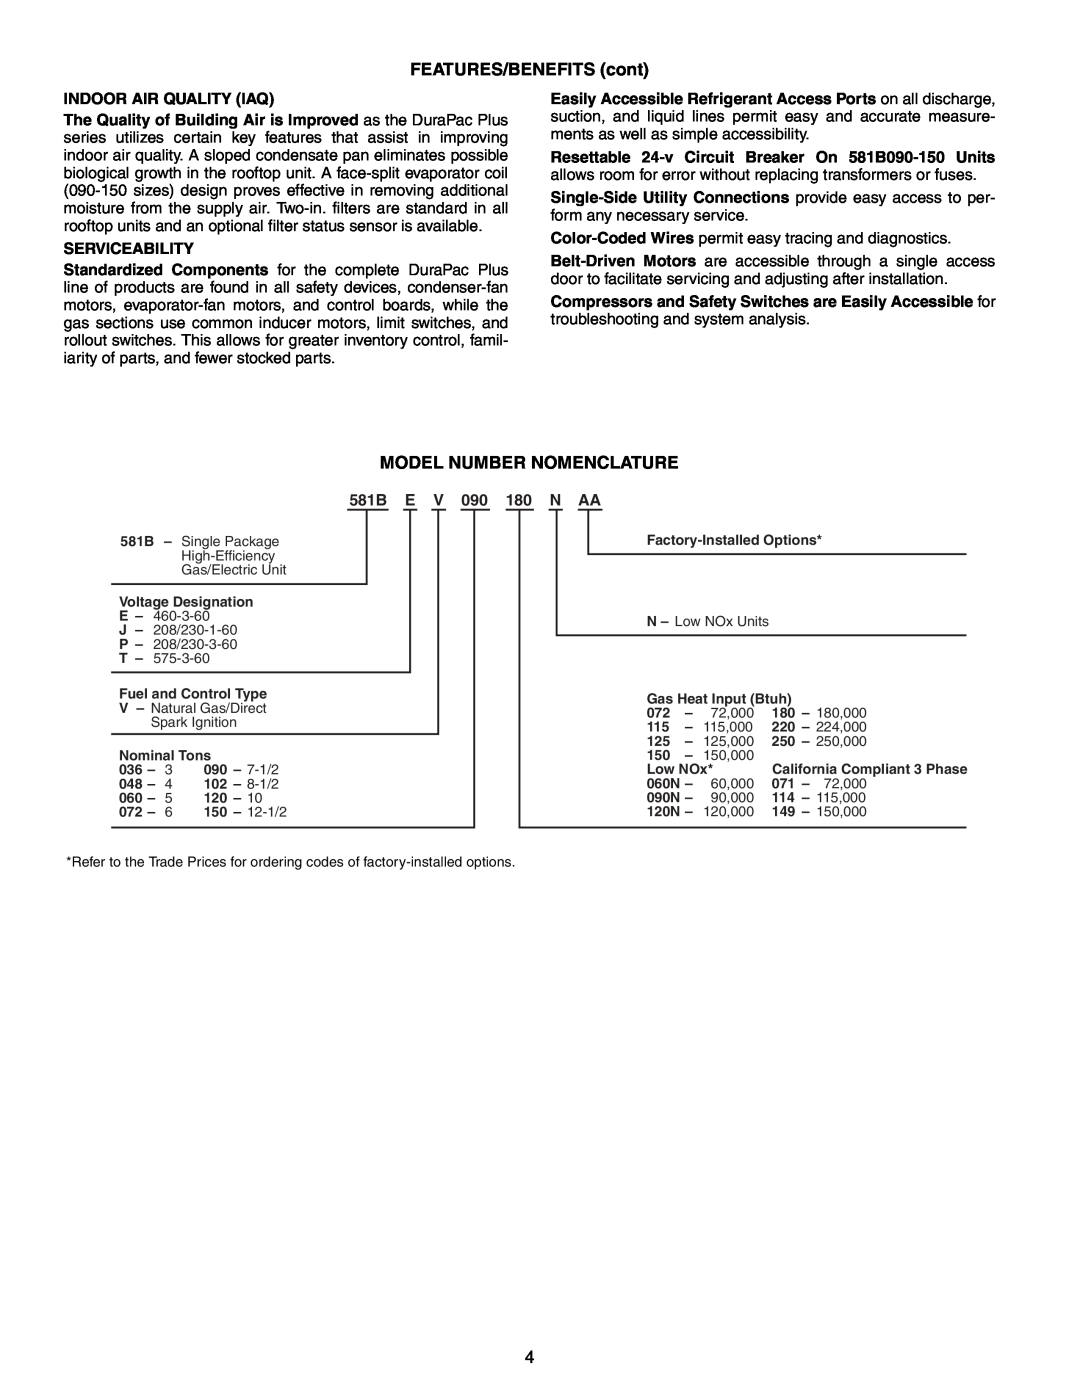 Bryant 581B manual Model Number Nomenclature, FEATURES/BENEFITS cont 